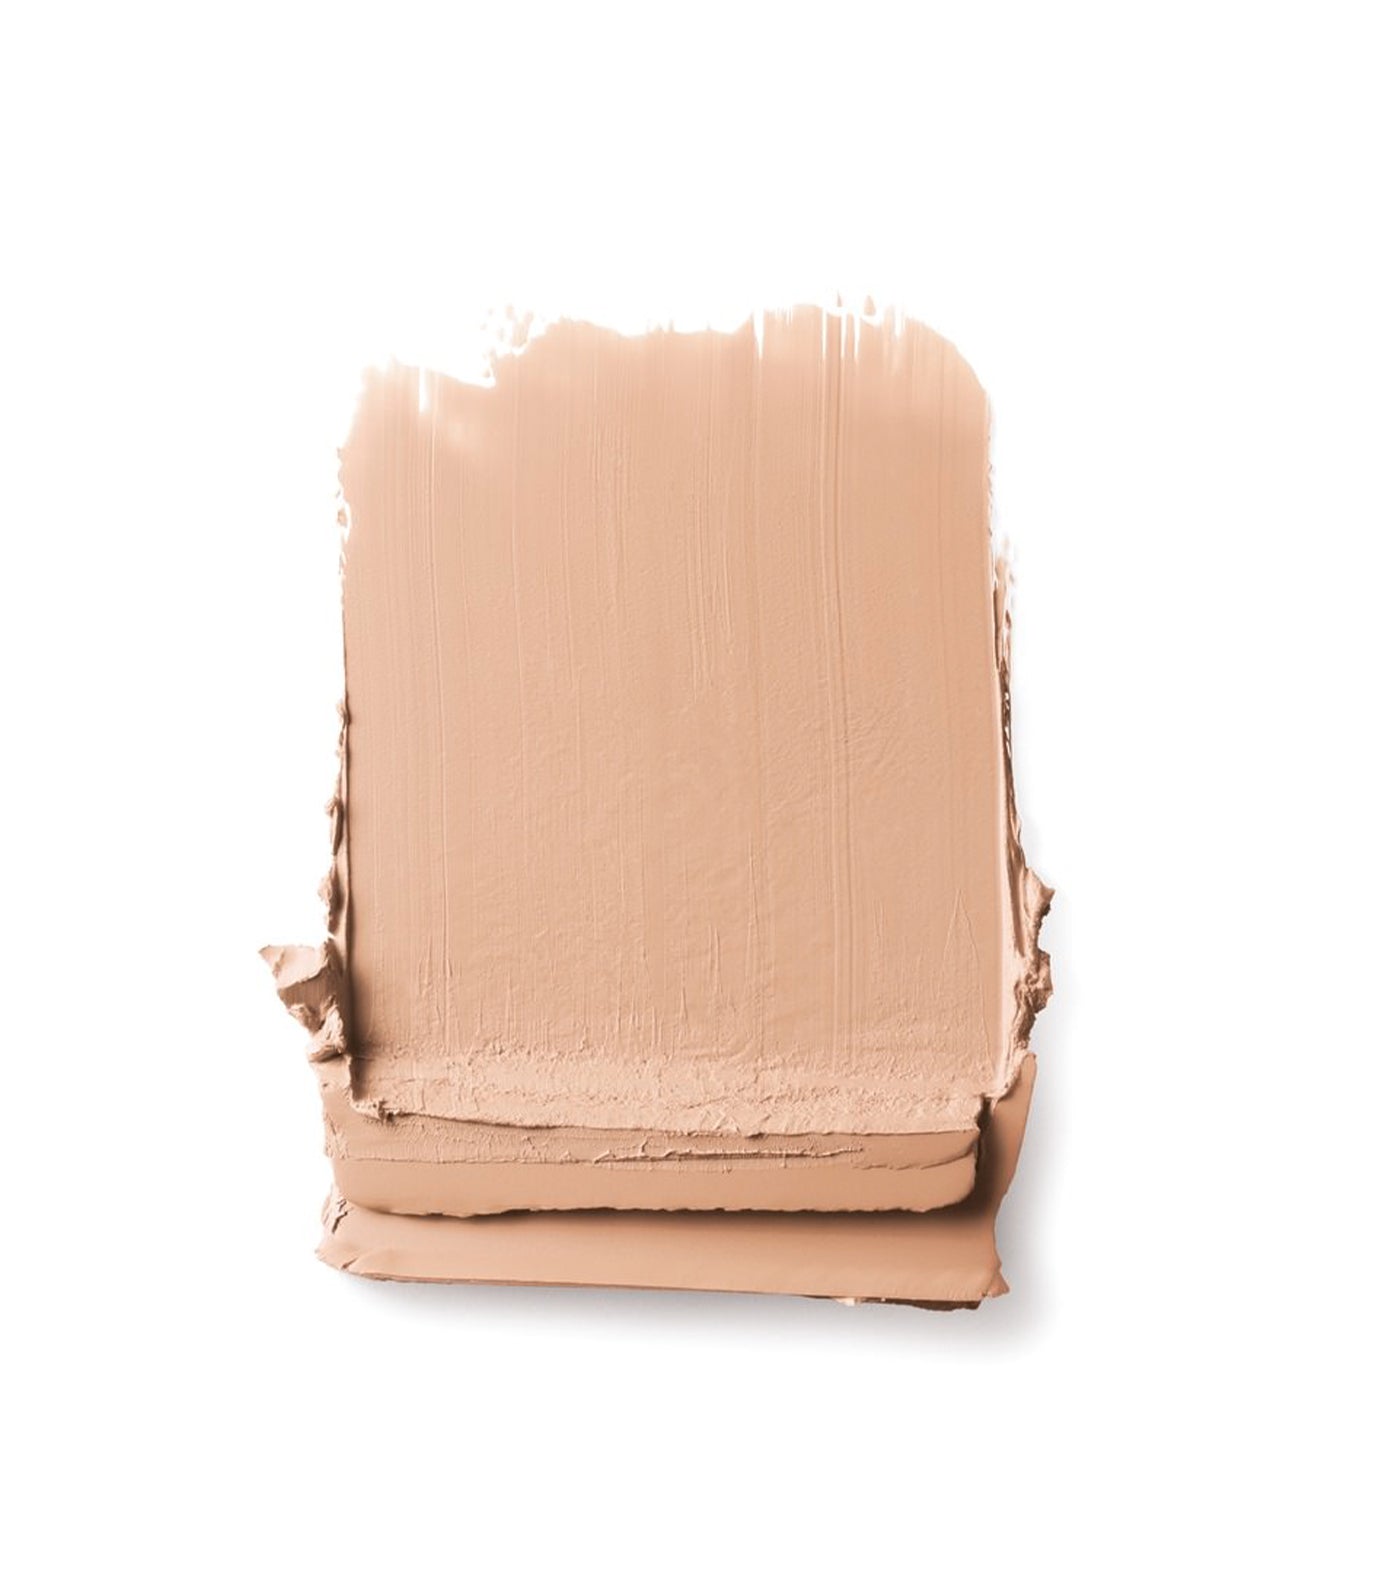 clinique cream beige even better compact makeup broad spectrum spf 15